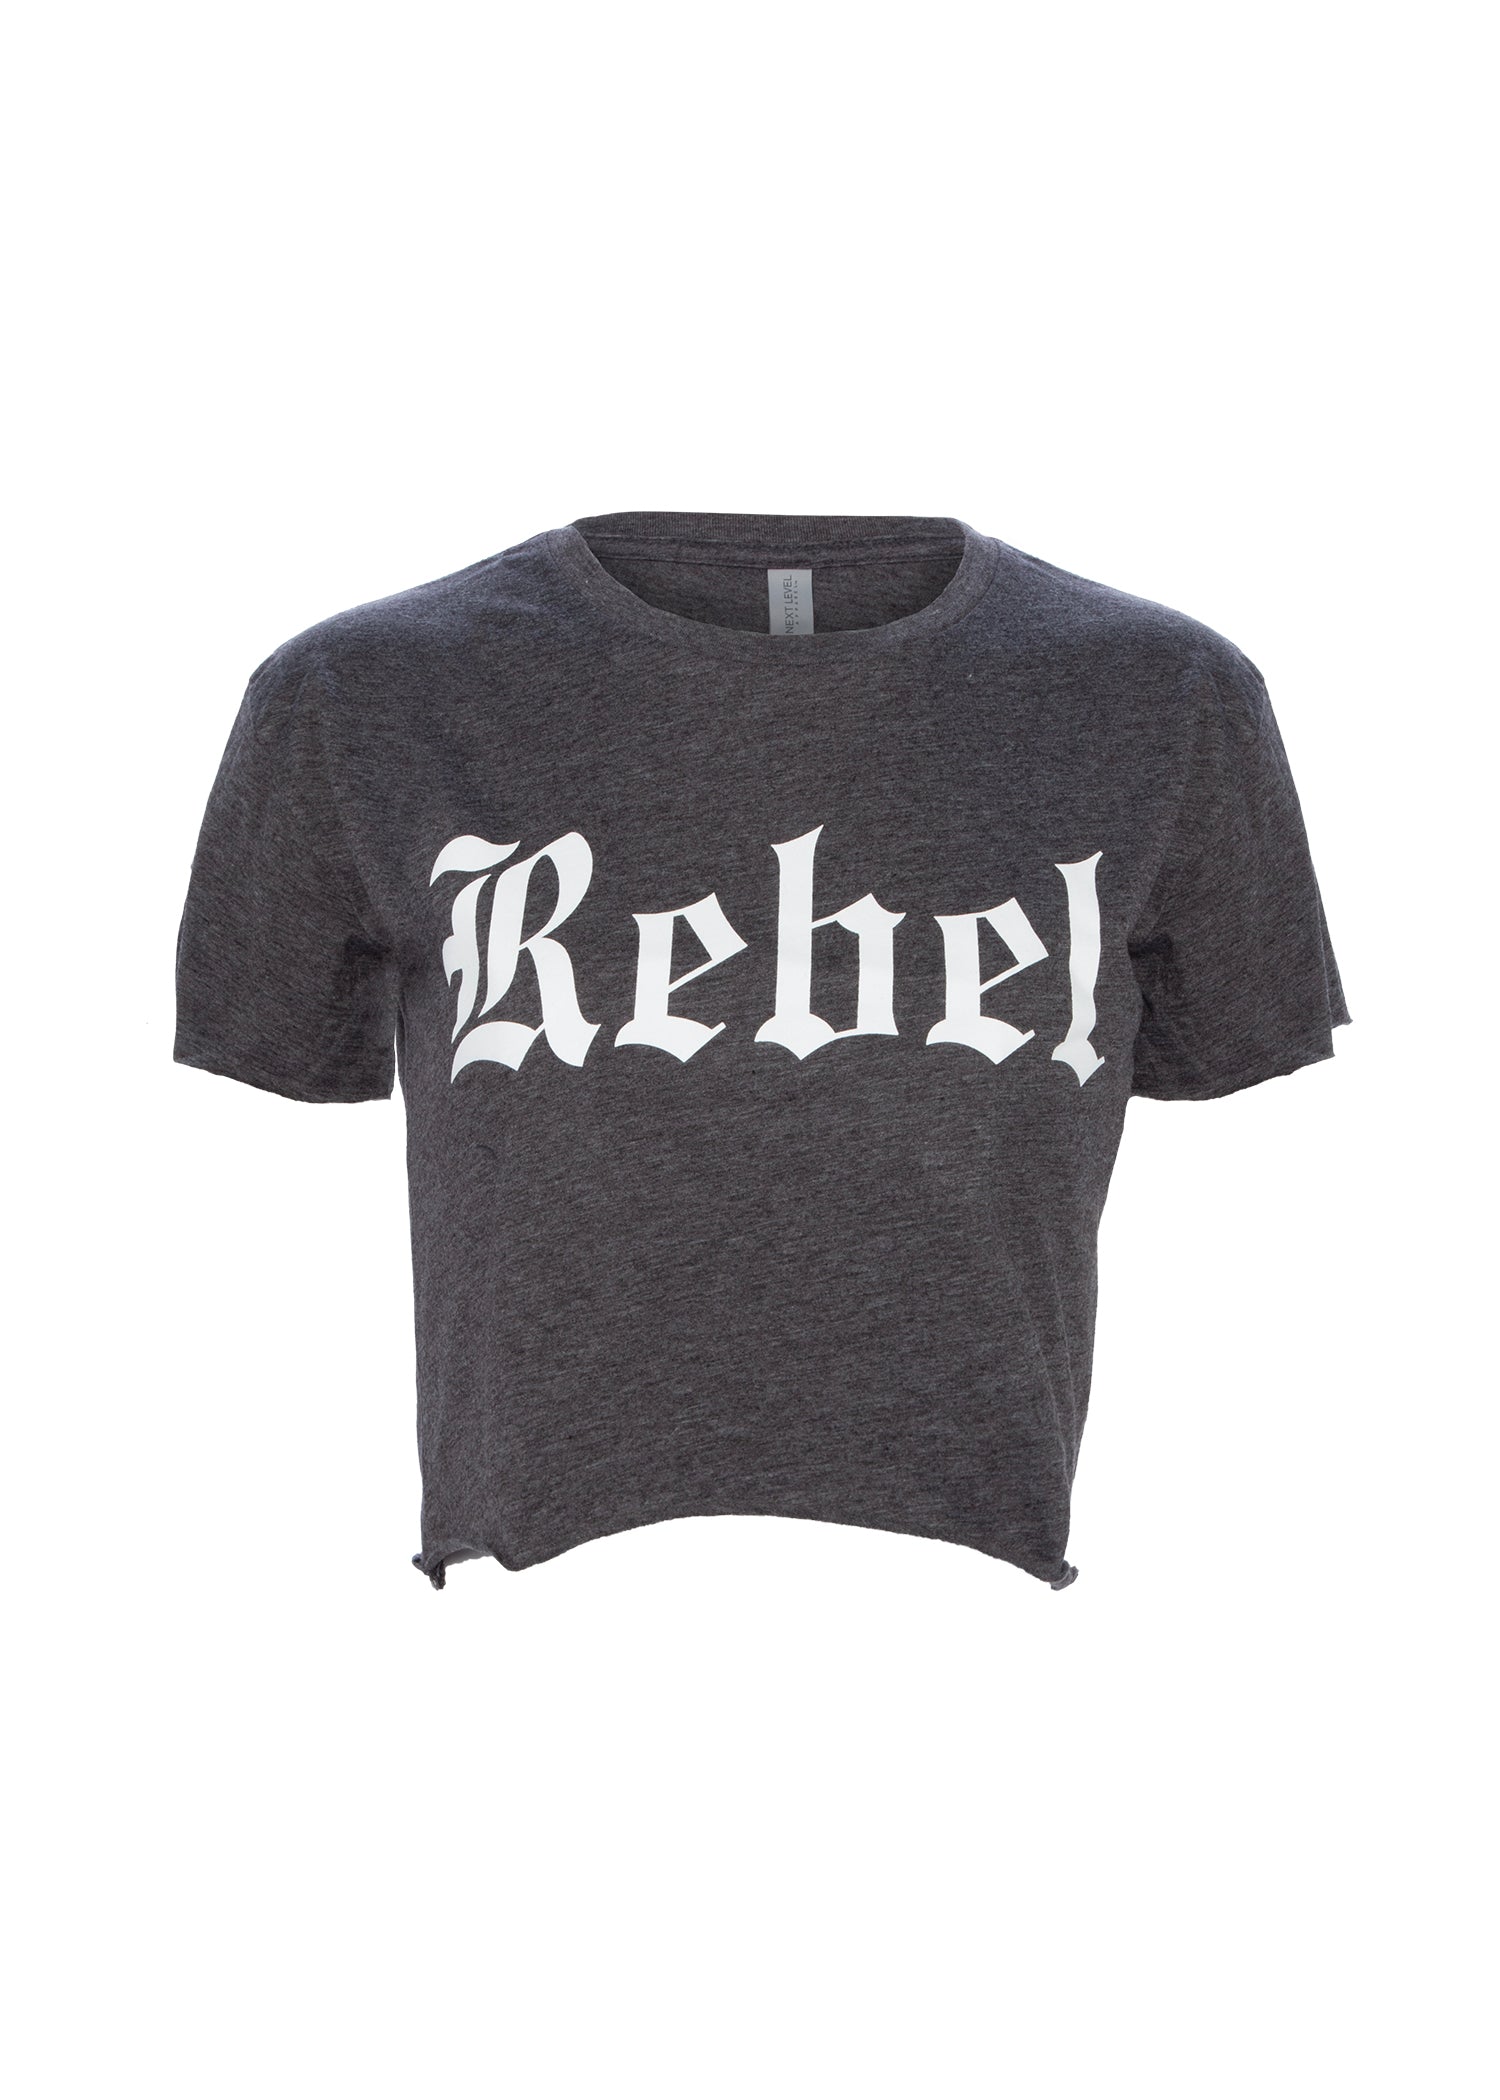 Cropped Rebel T Shirt | Rebel Tee | Rock n Roll Shirt | Punk Shirt ...